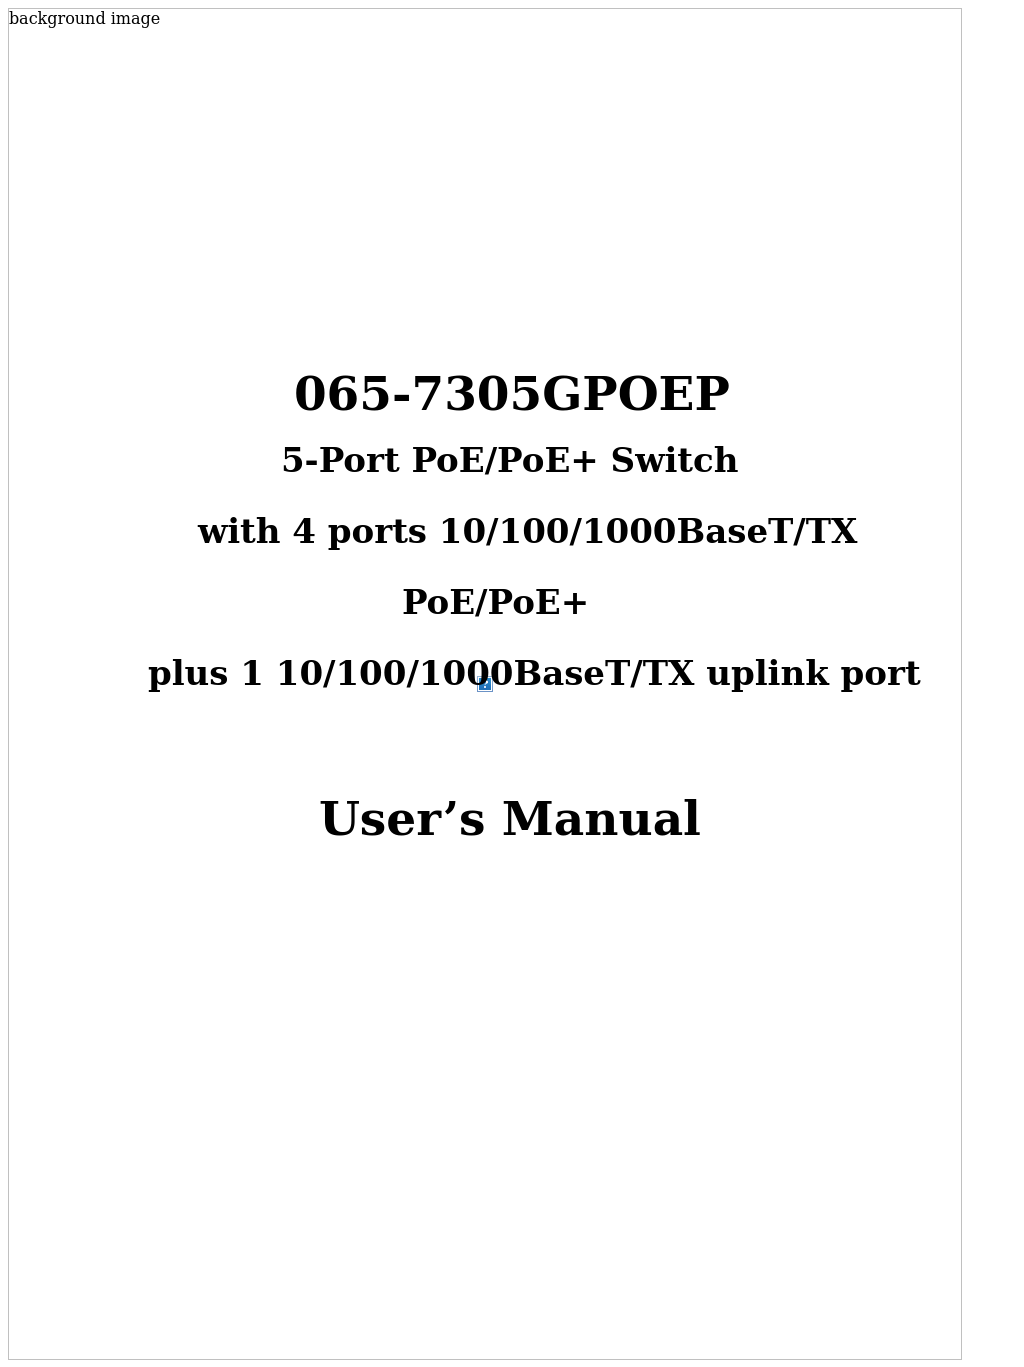 5-Port 10/100/1000BaseT/TX PoE+ Switch with 4 PoE+ Ports